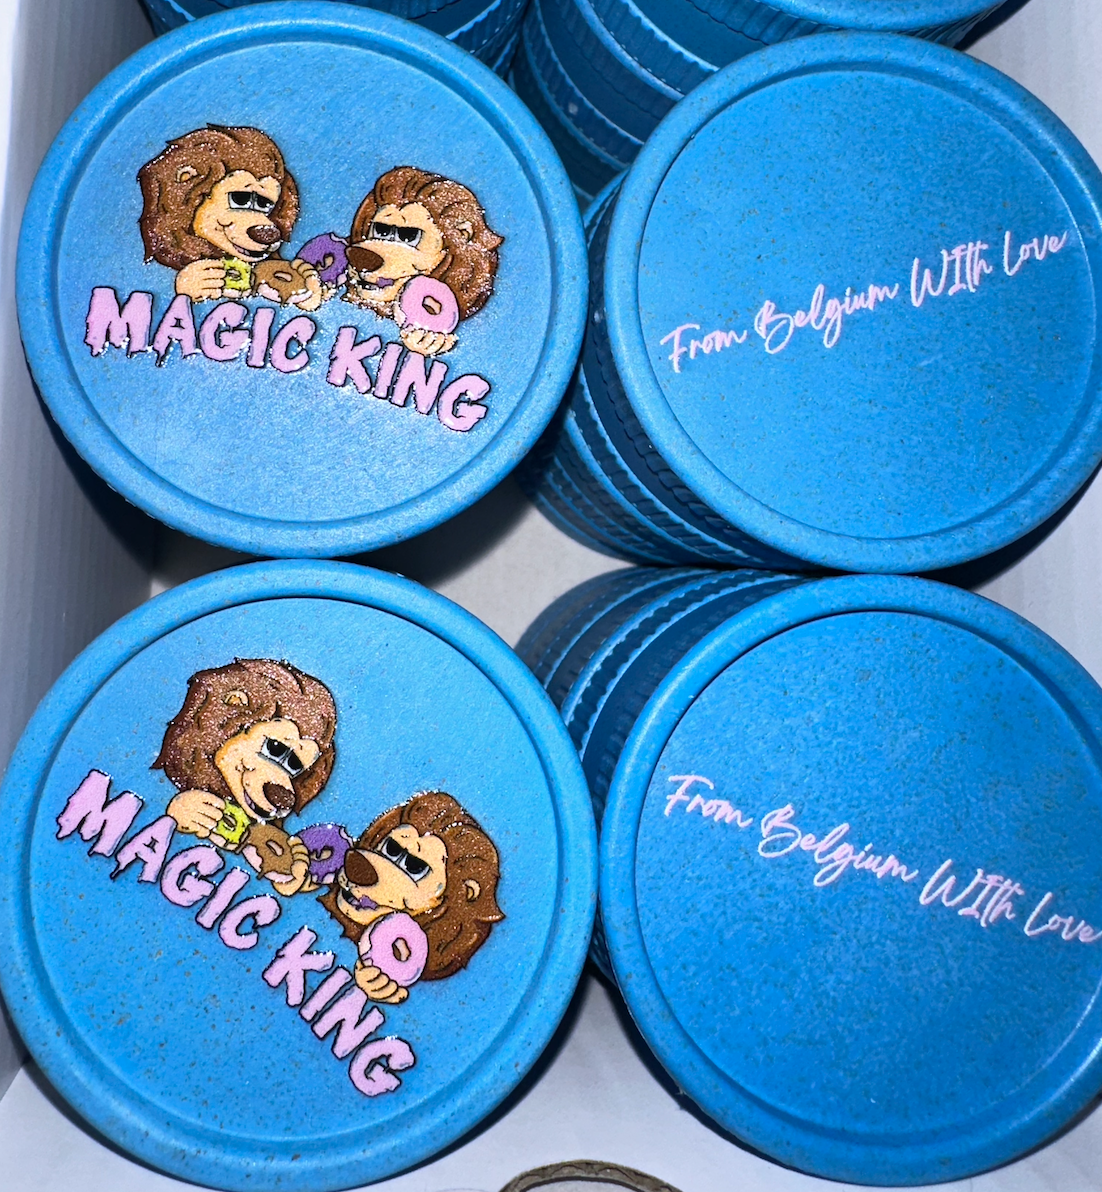 Magic King Blue Hemp Grinder - Lions Donuts